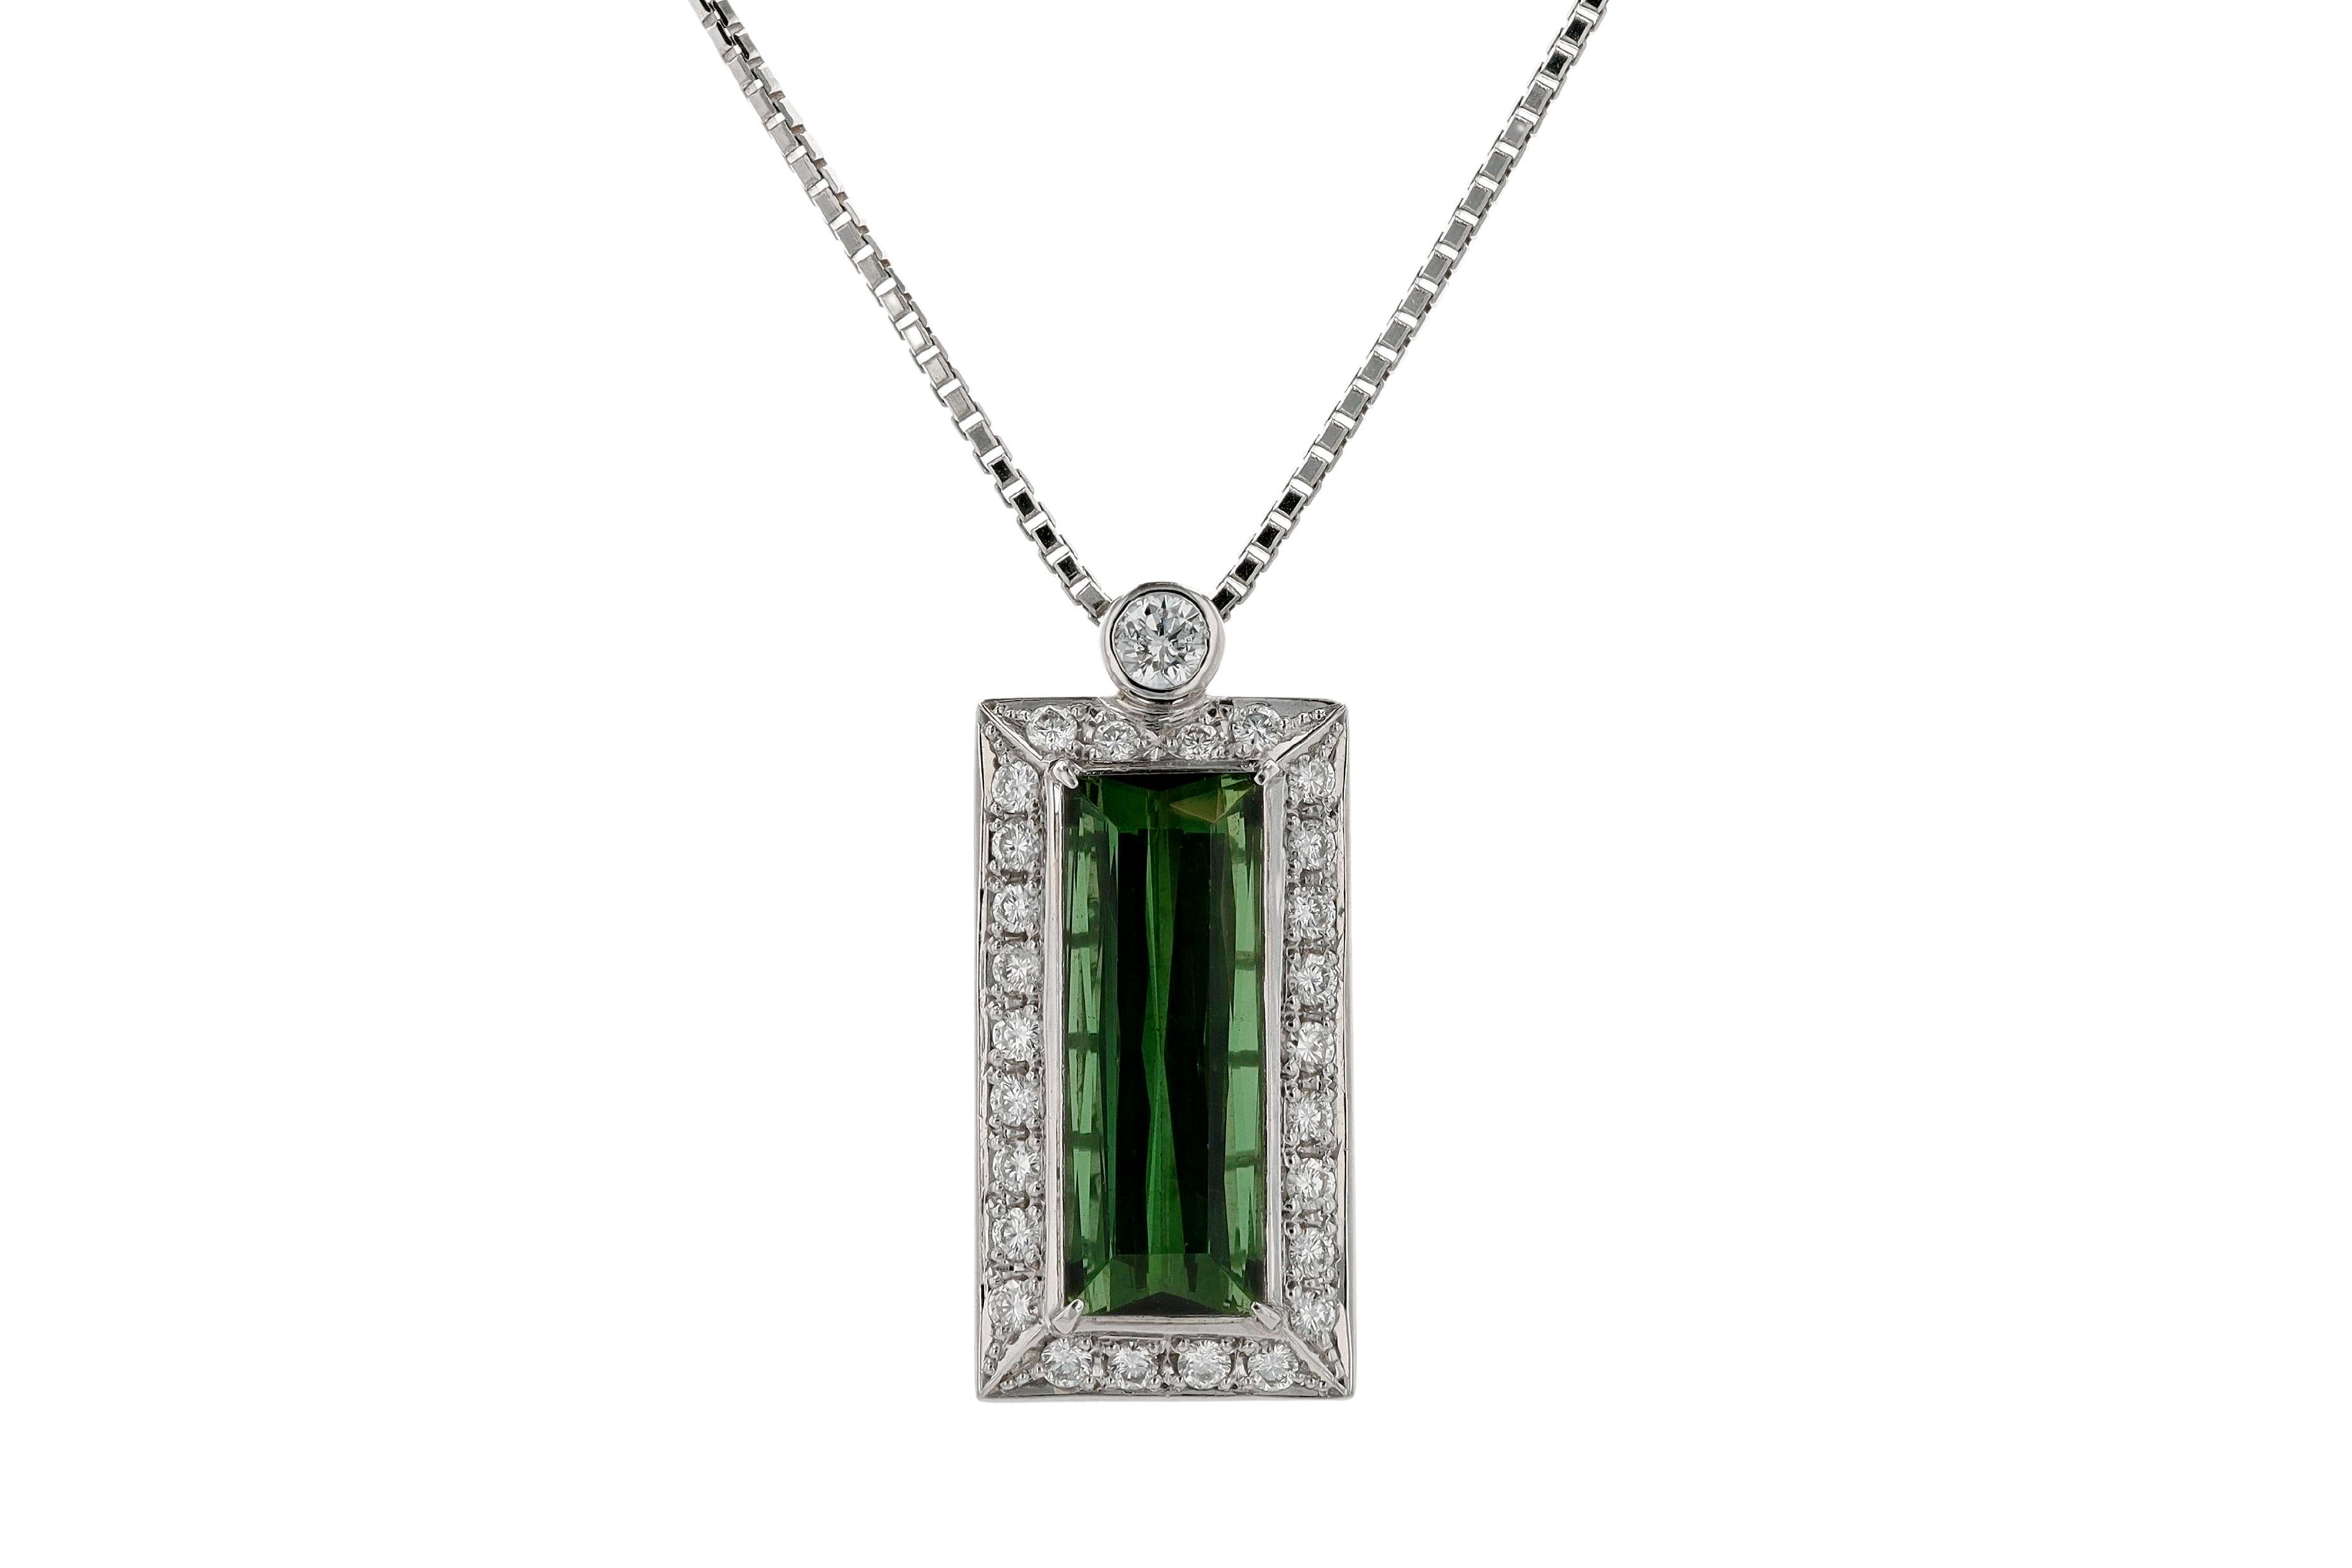 Modern 6 Carat Emerald Cut Green Tourmaline Diamond Pendant Necklace